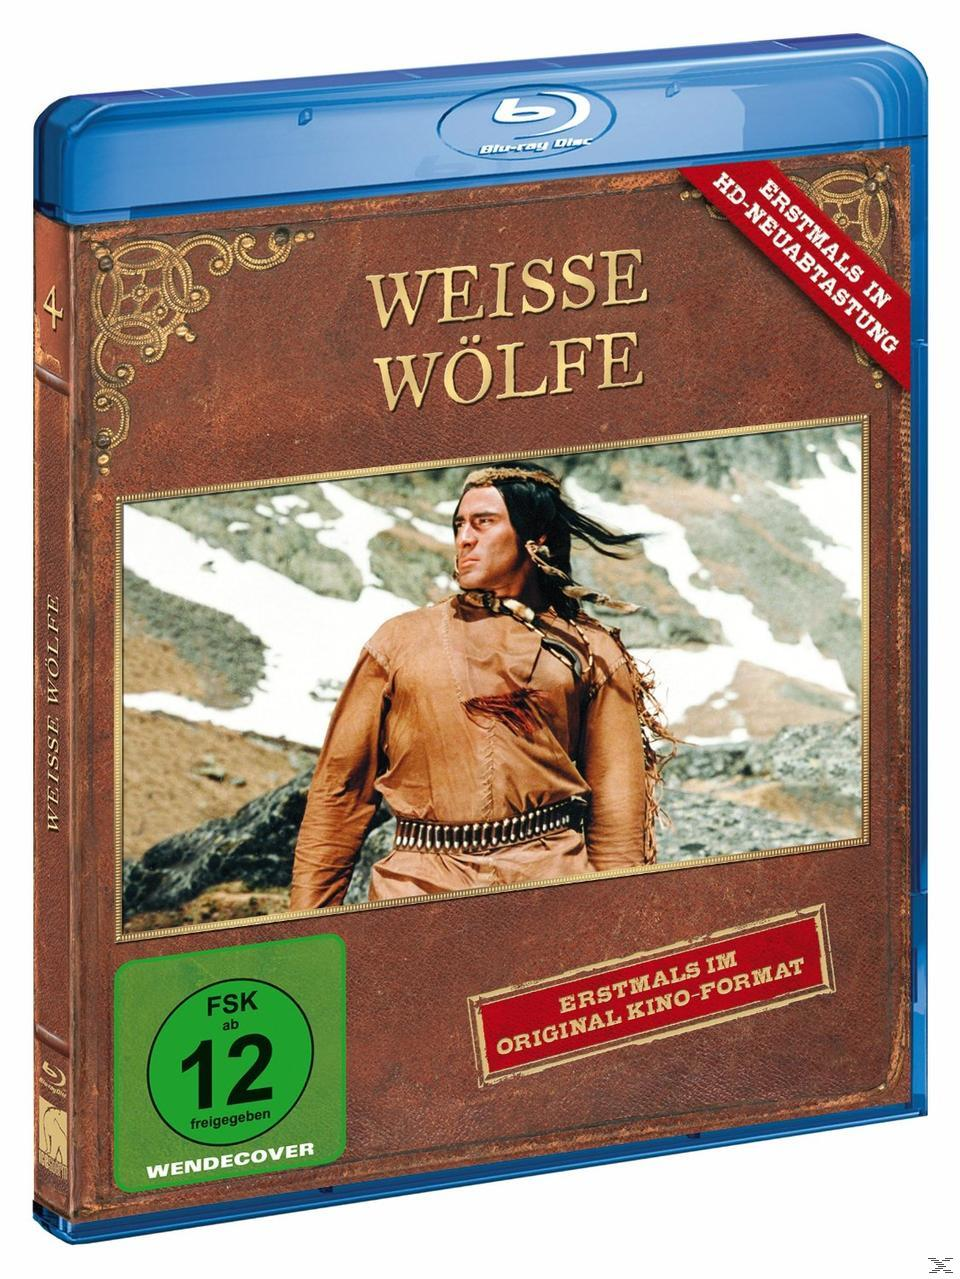 Weisse Blu-ray Wölfe